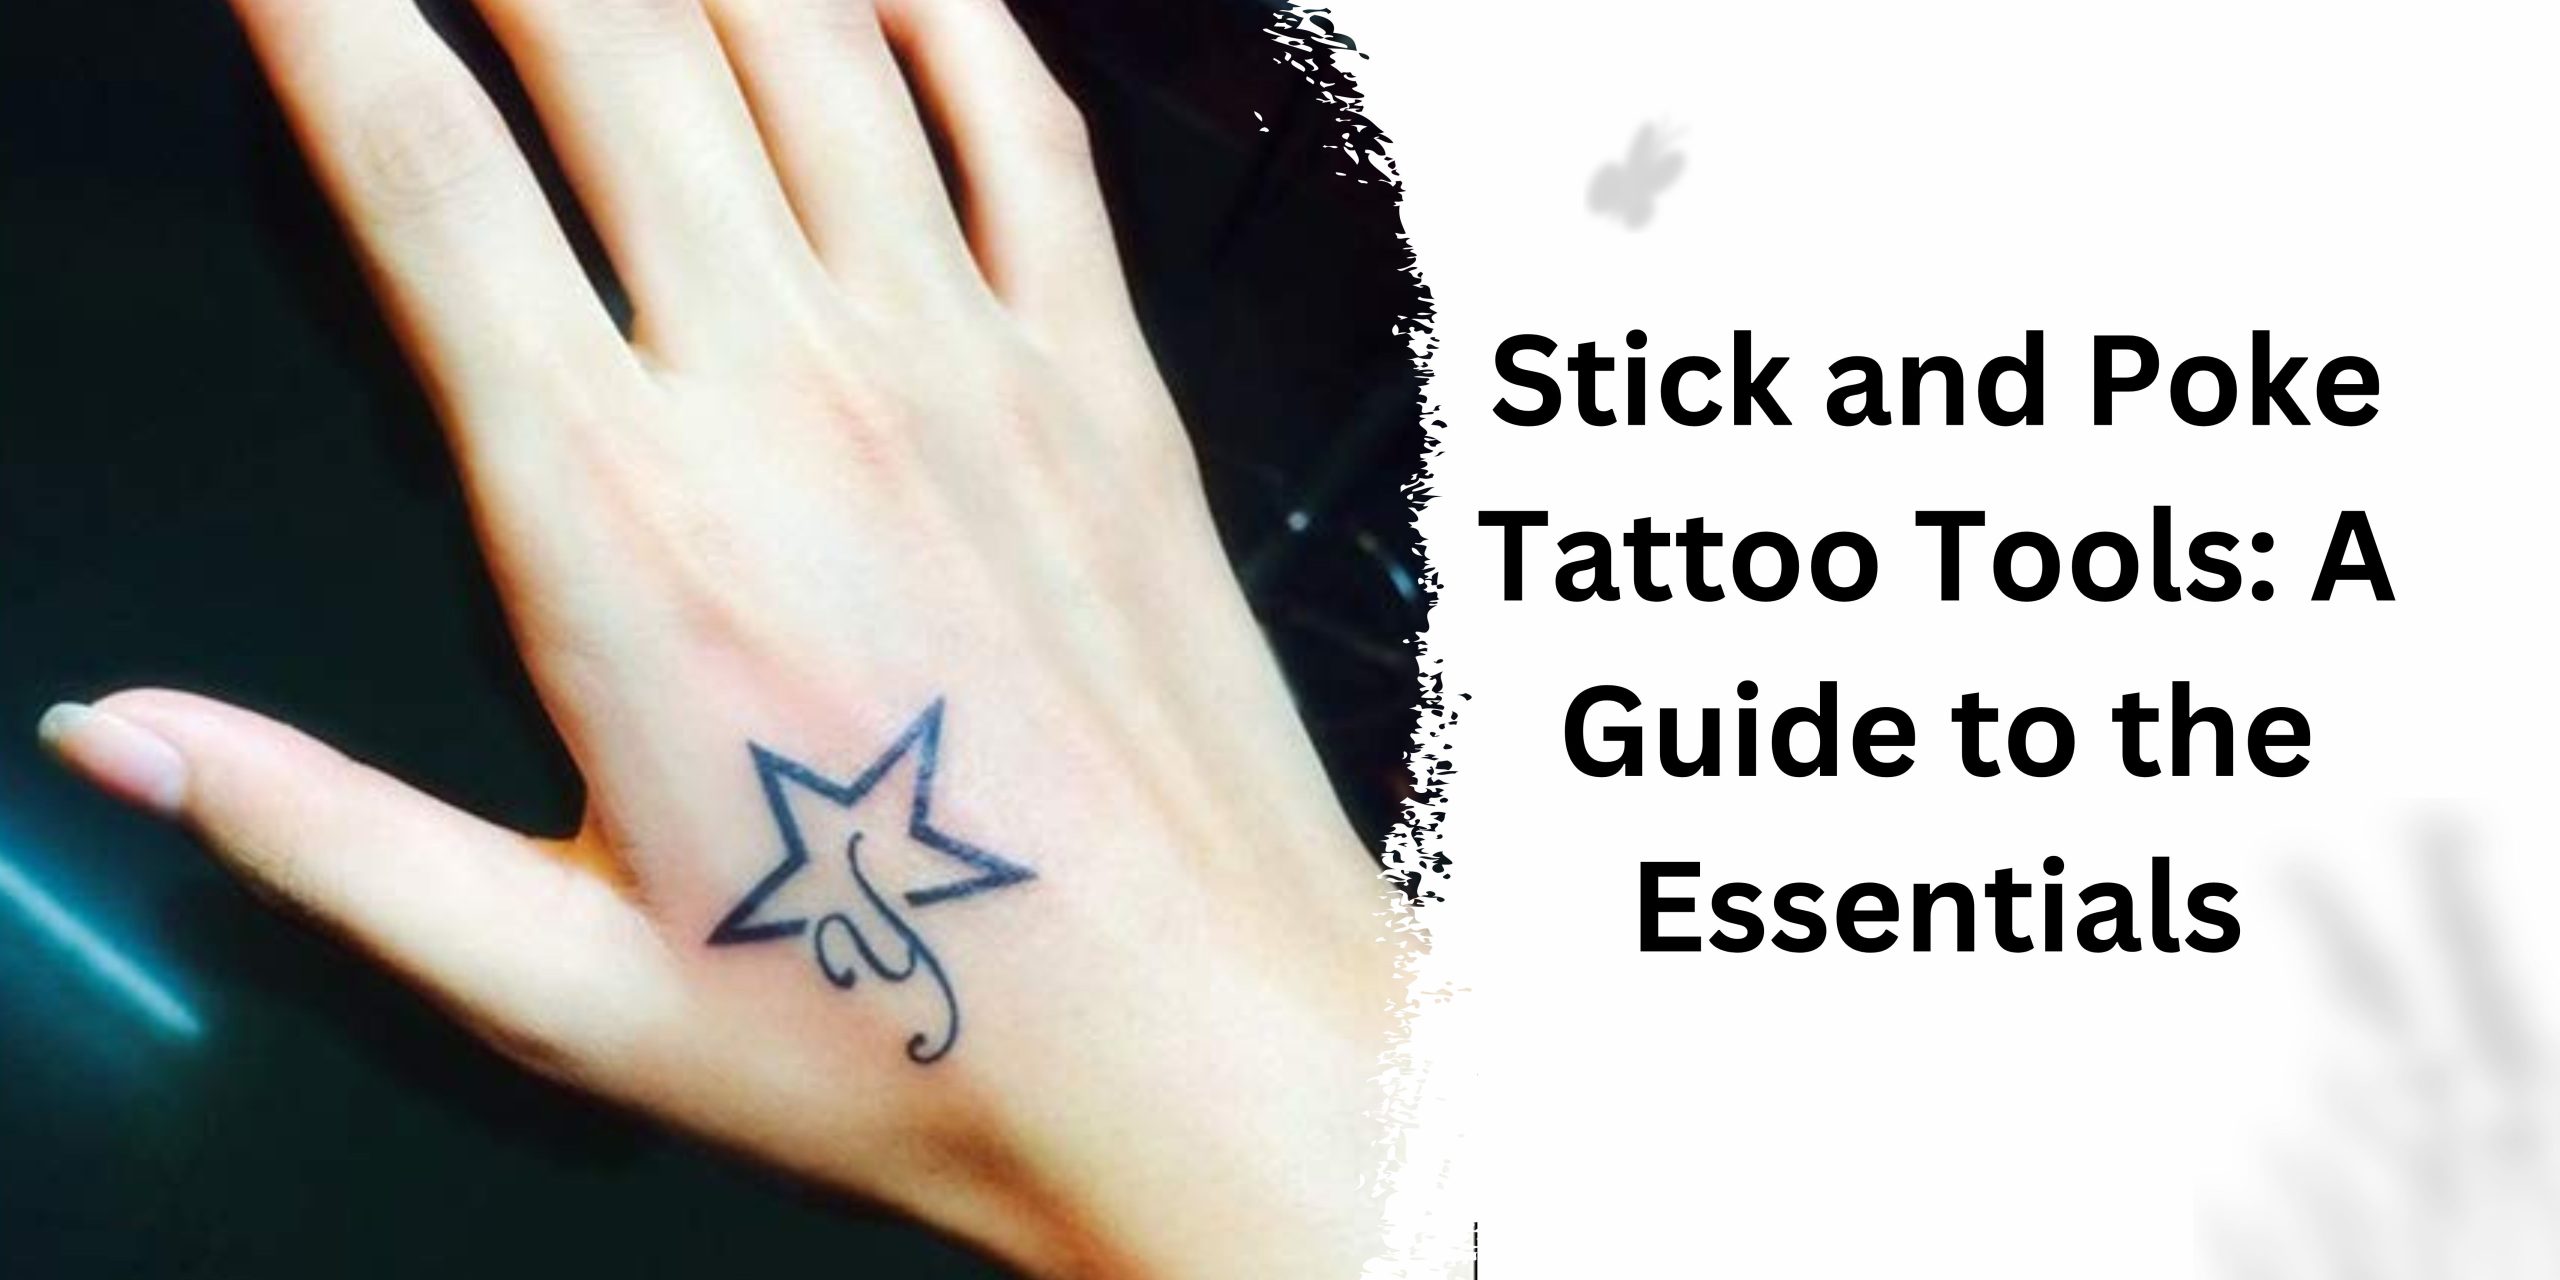 Stick and Poke Tattoo Tools